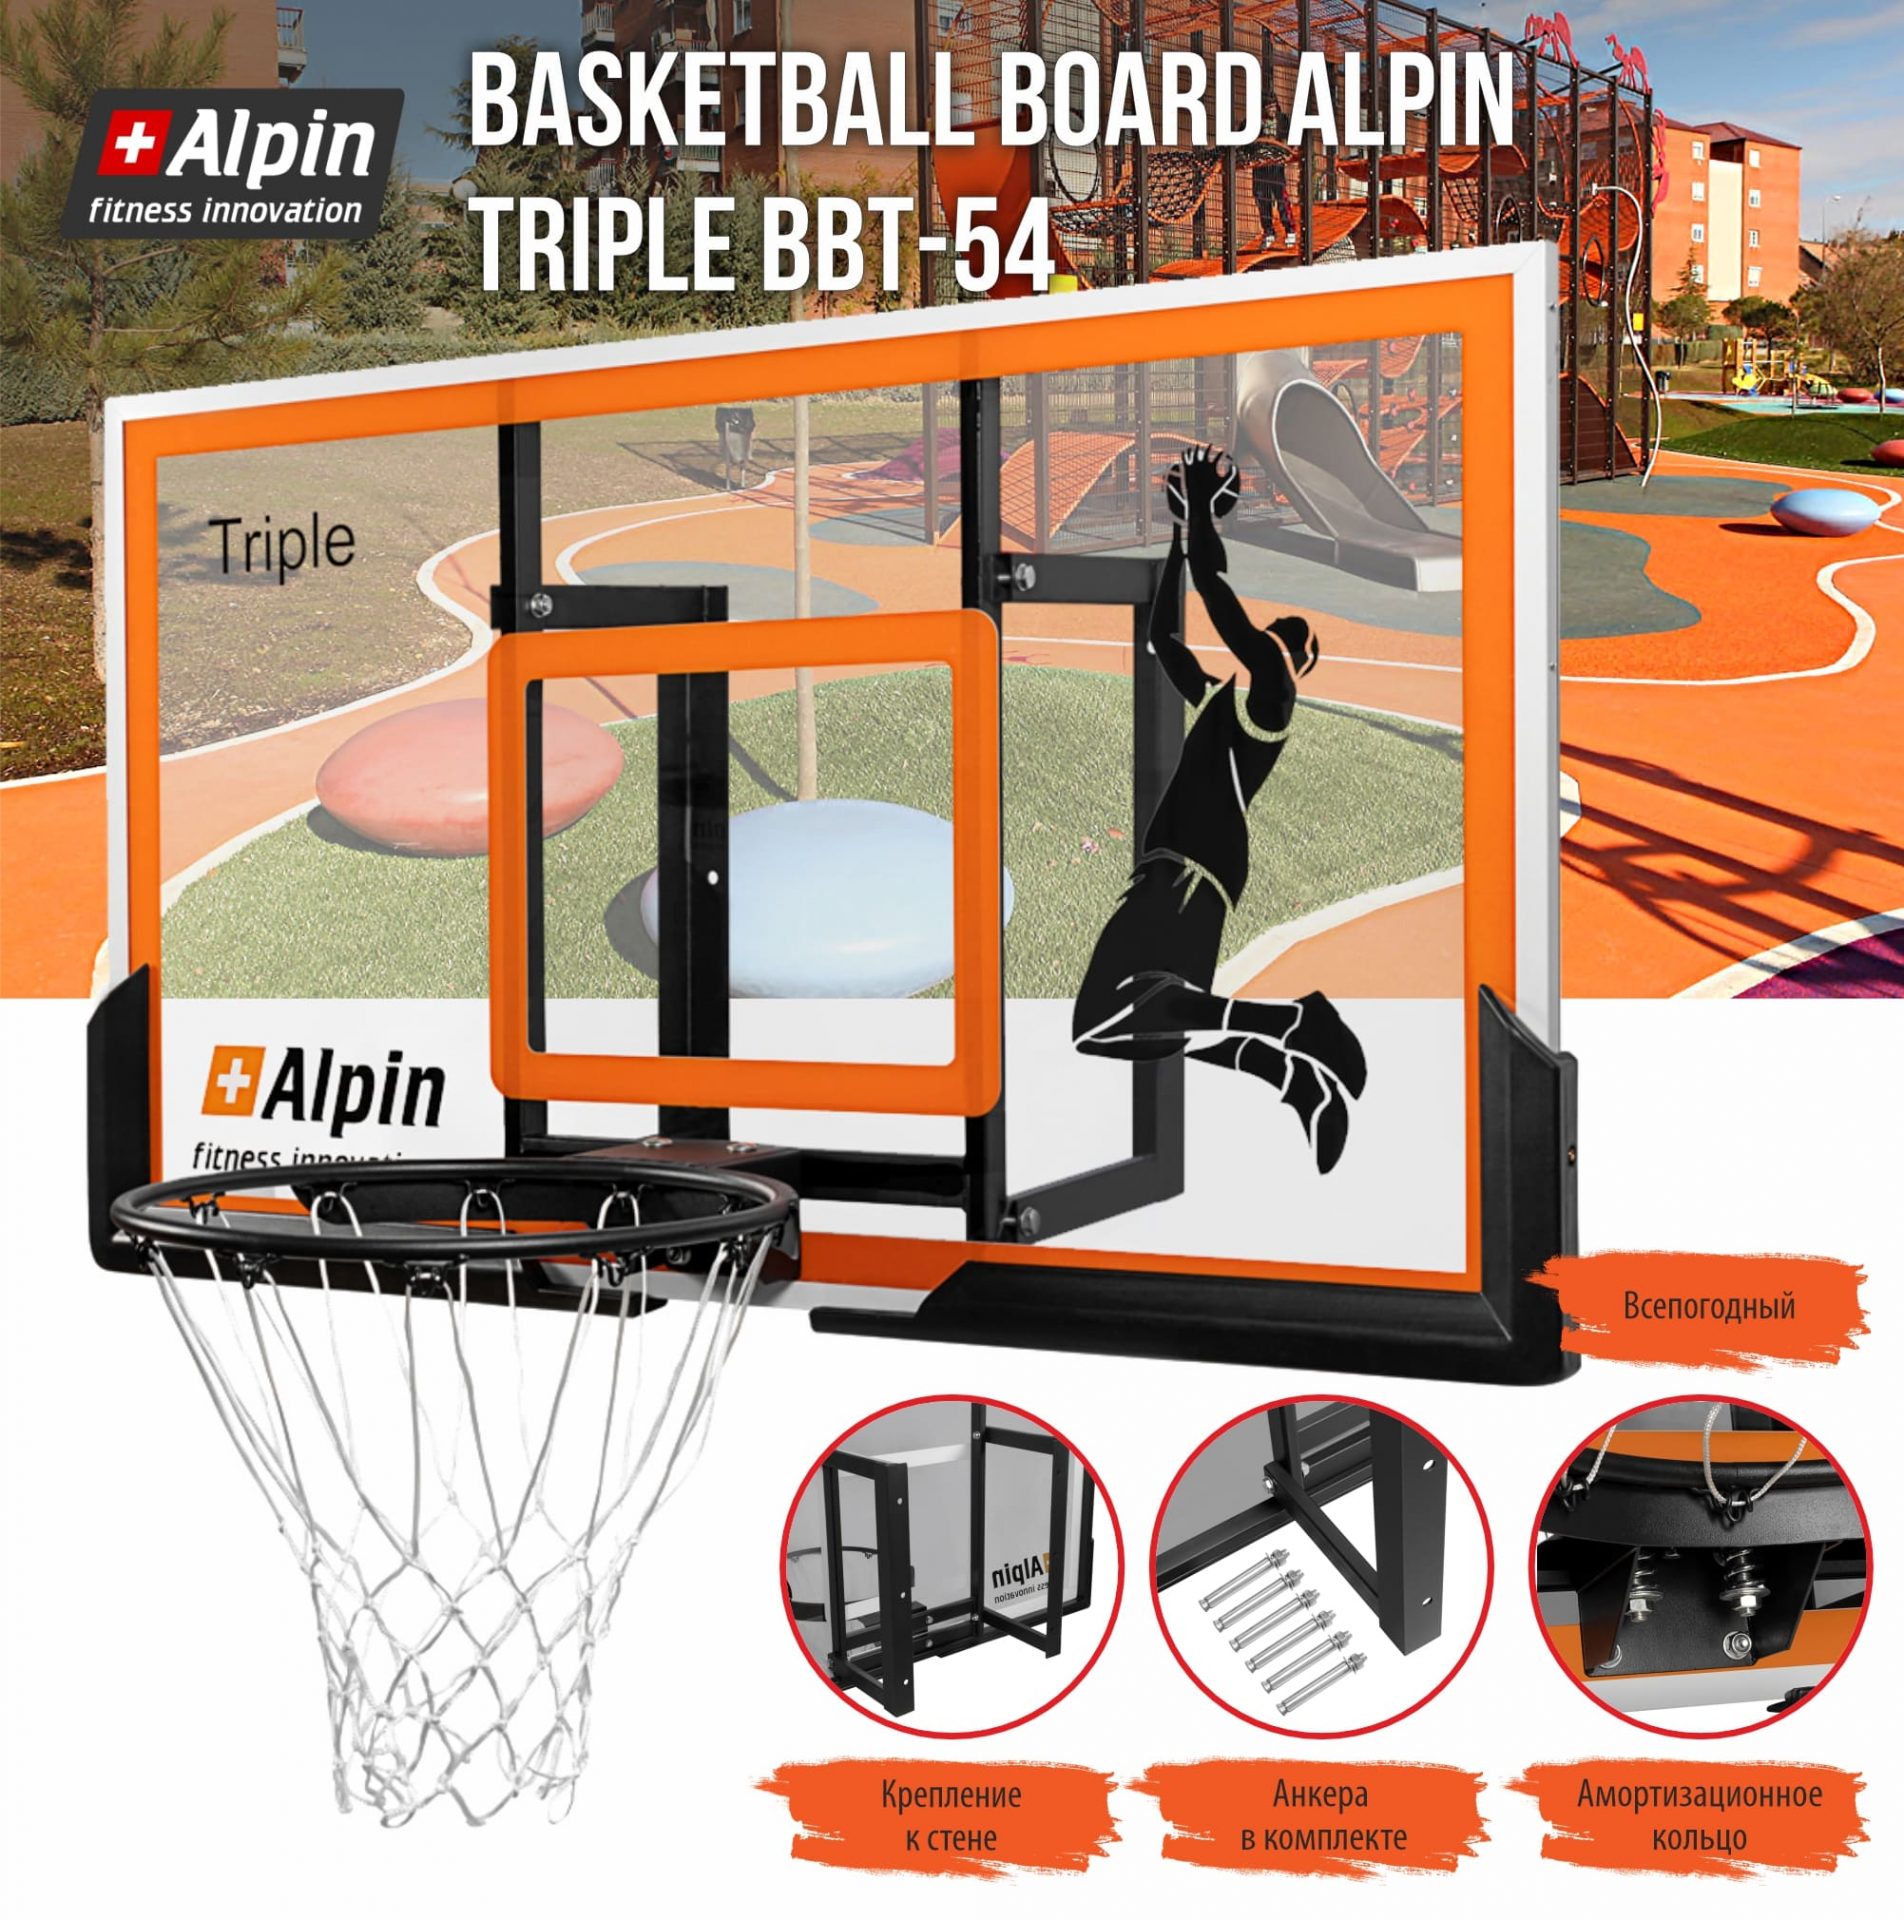 basketball board alpin triple bbt 54